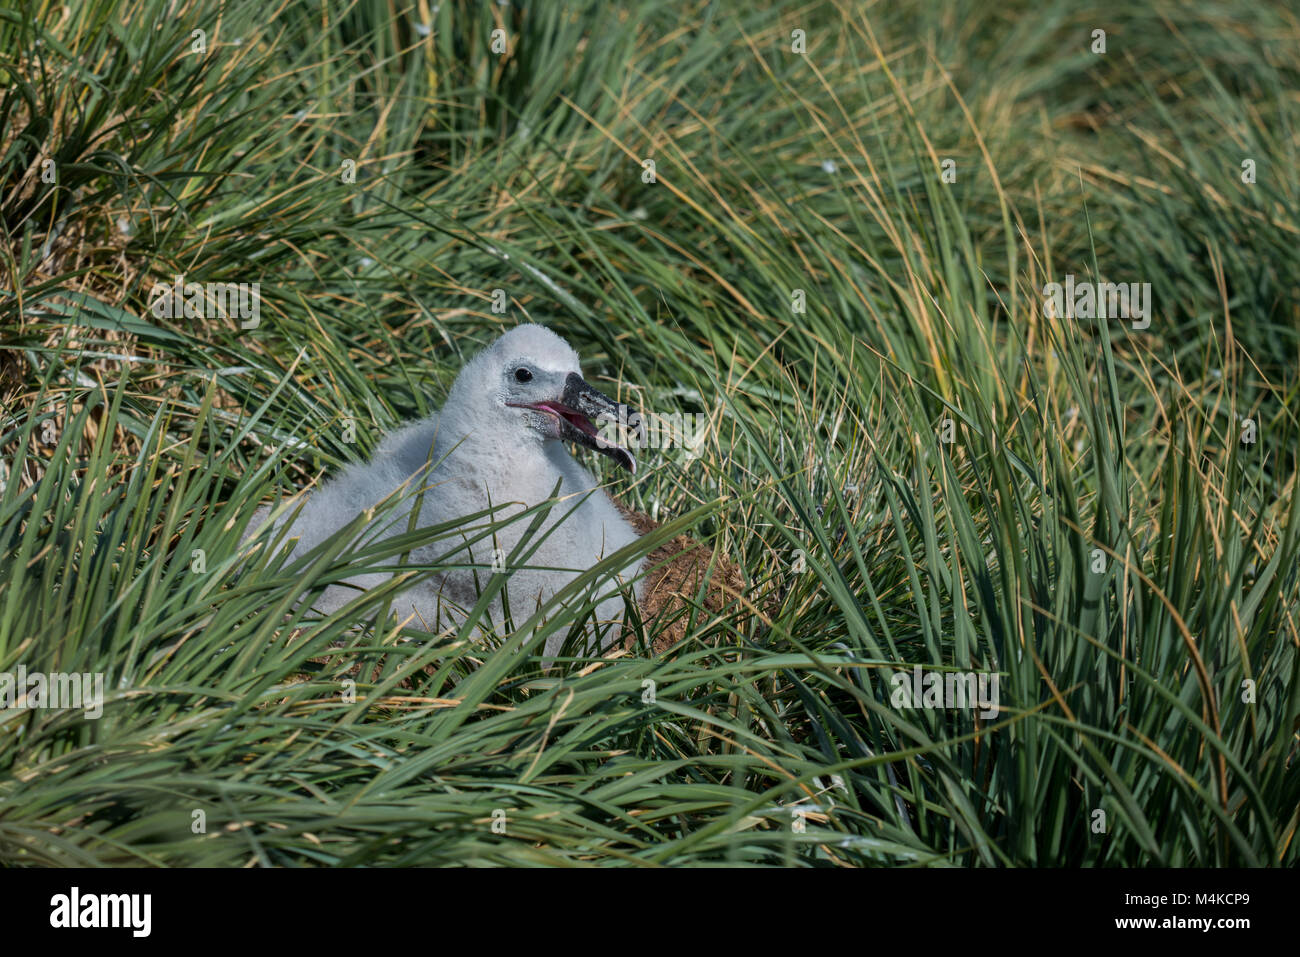 Falkland Islands, West Point Island. Black-browed albatross (Wild: Thalassarche melanophris) nesting colony. Albatross chick in tussock grass habitat. Stock Photo